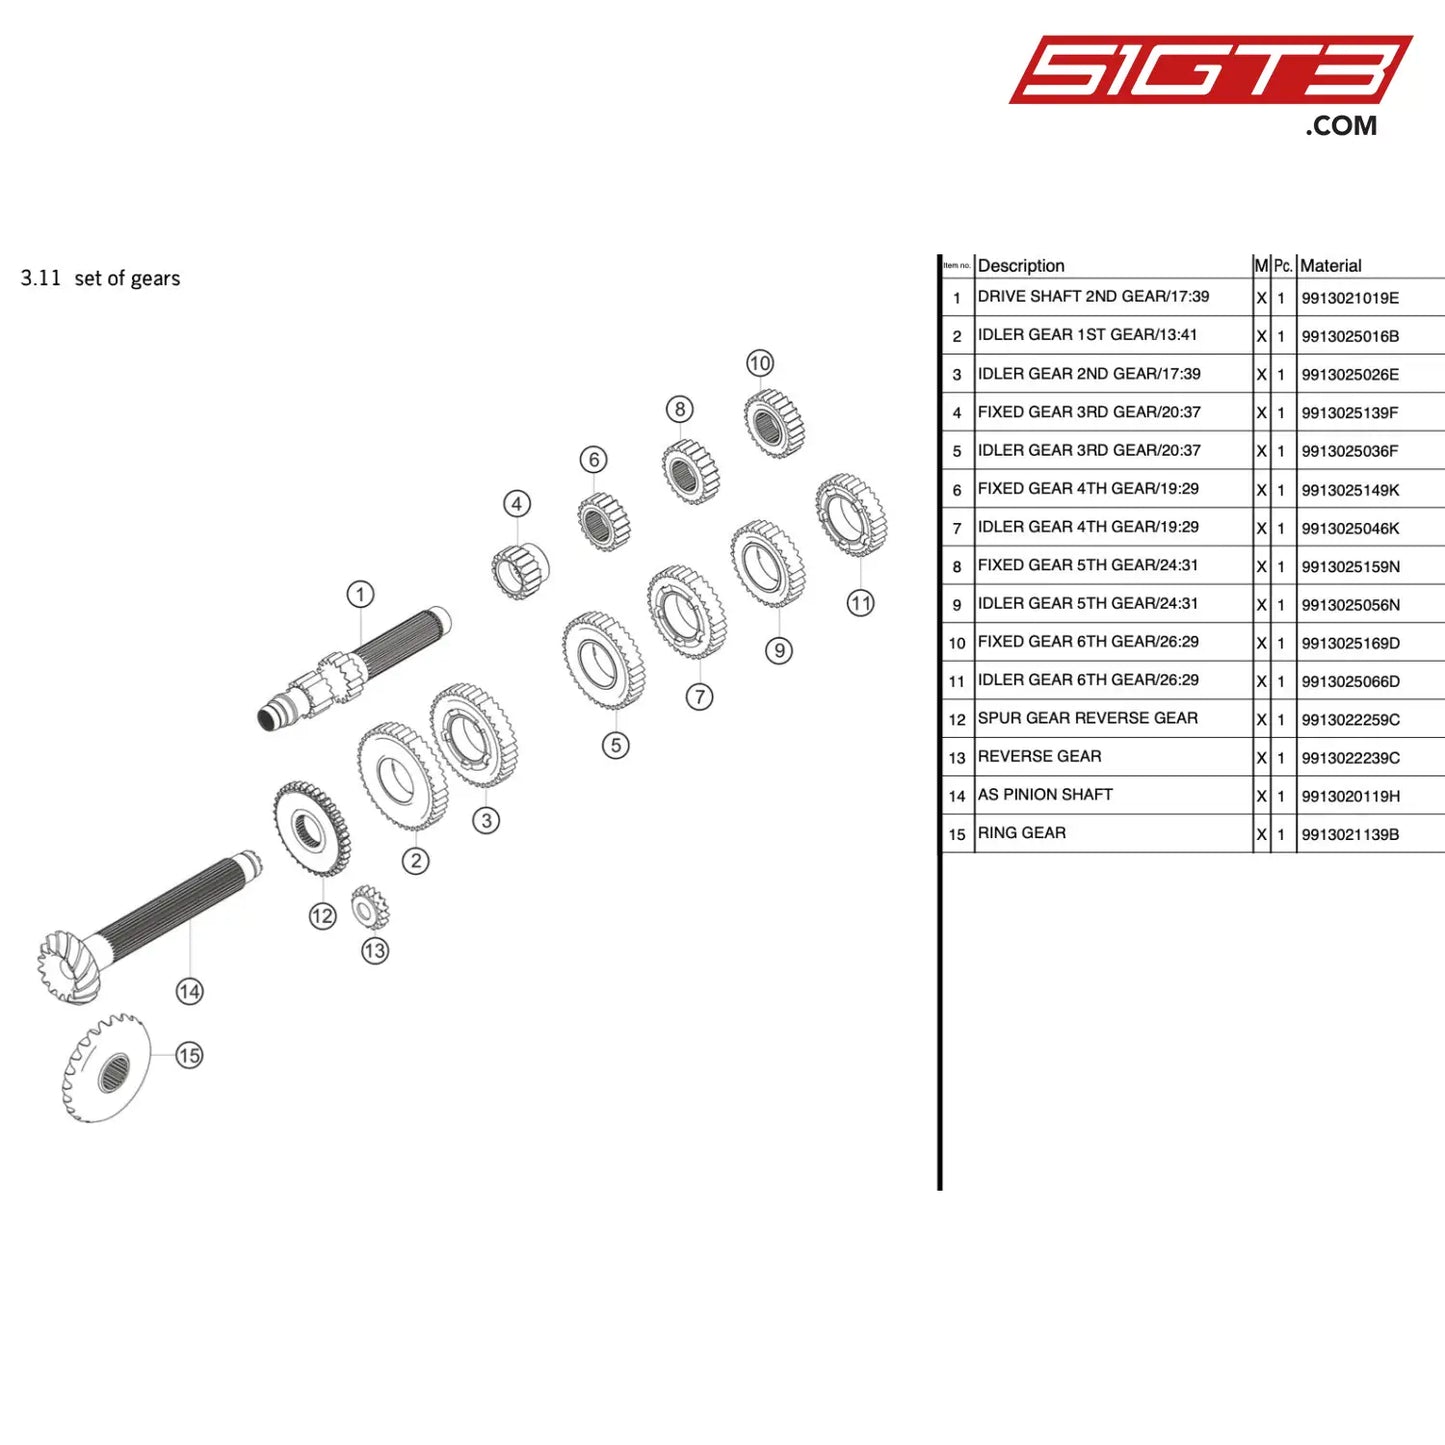 Idler Gear 6Th Gear/26:29 - 9913025066D [Porsche 911 Gt3 R Type 991 (Gen 1)] Set Of Gears